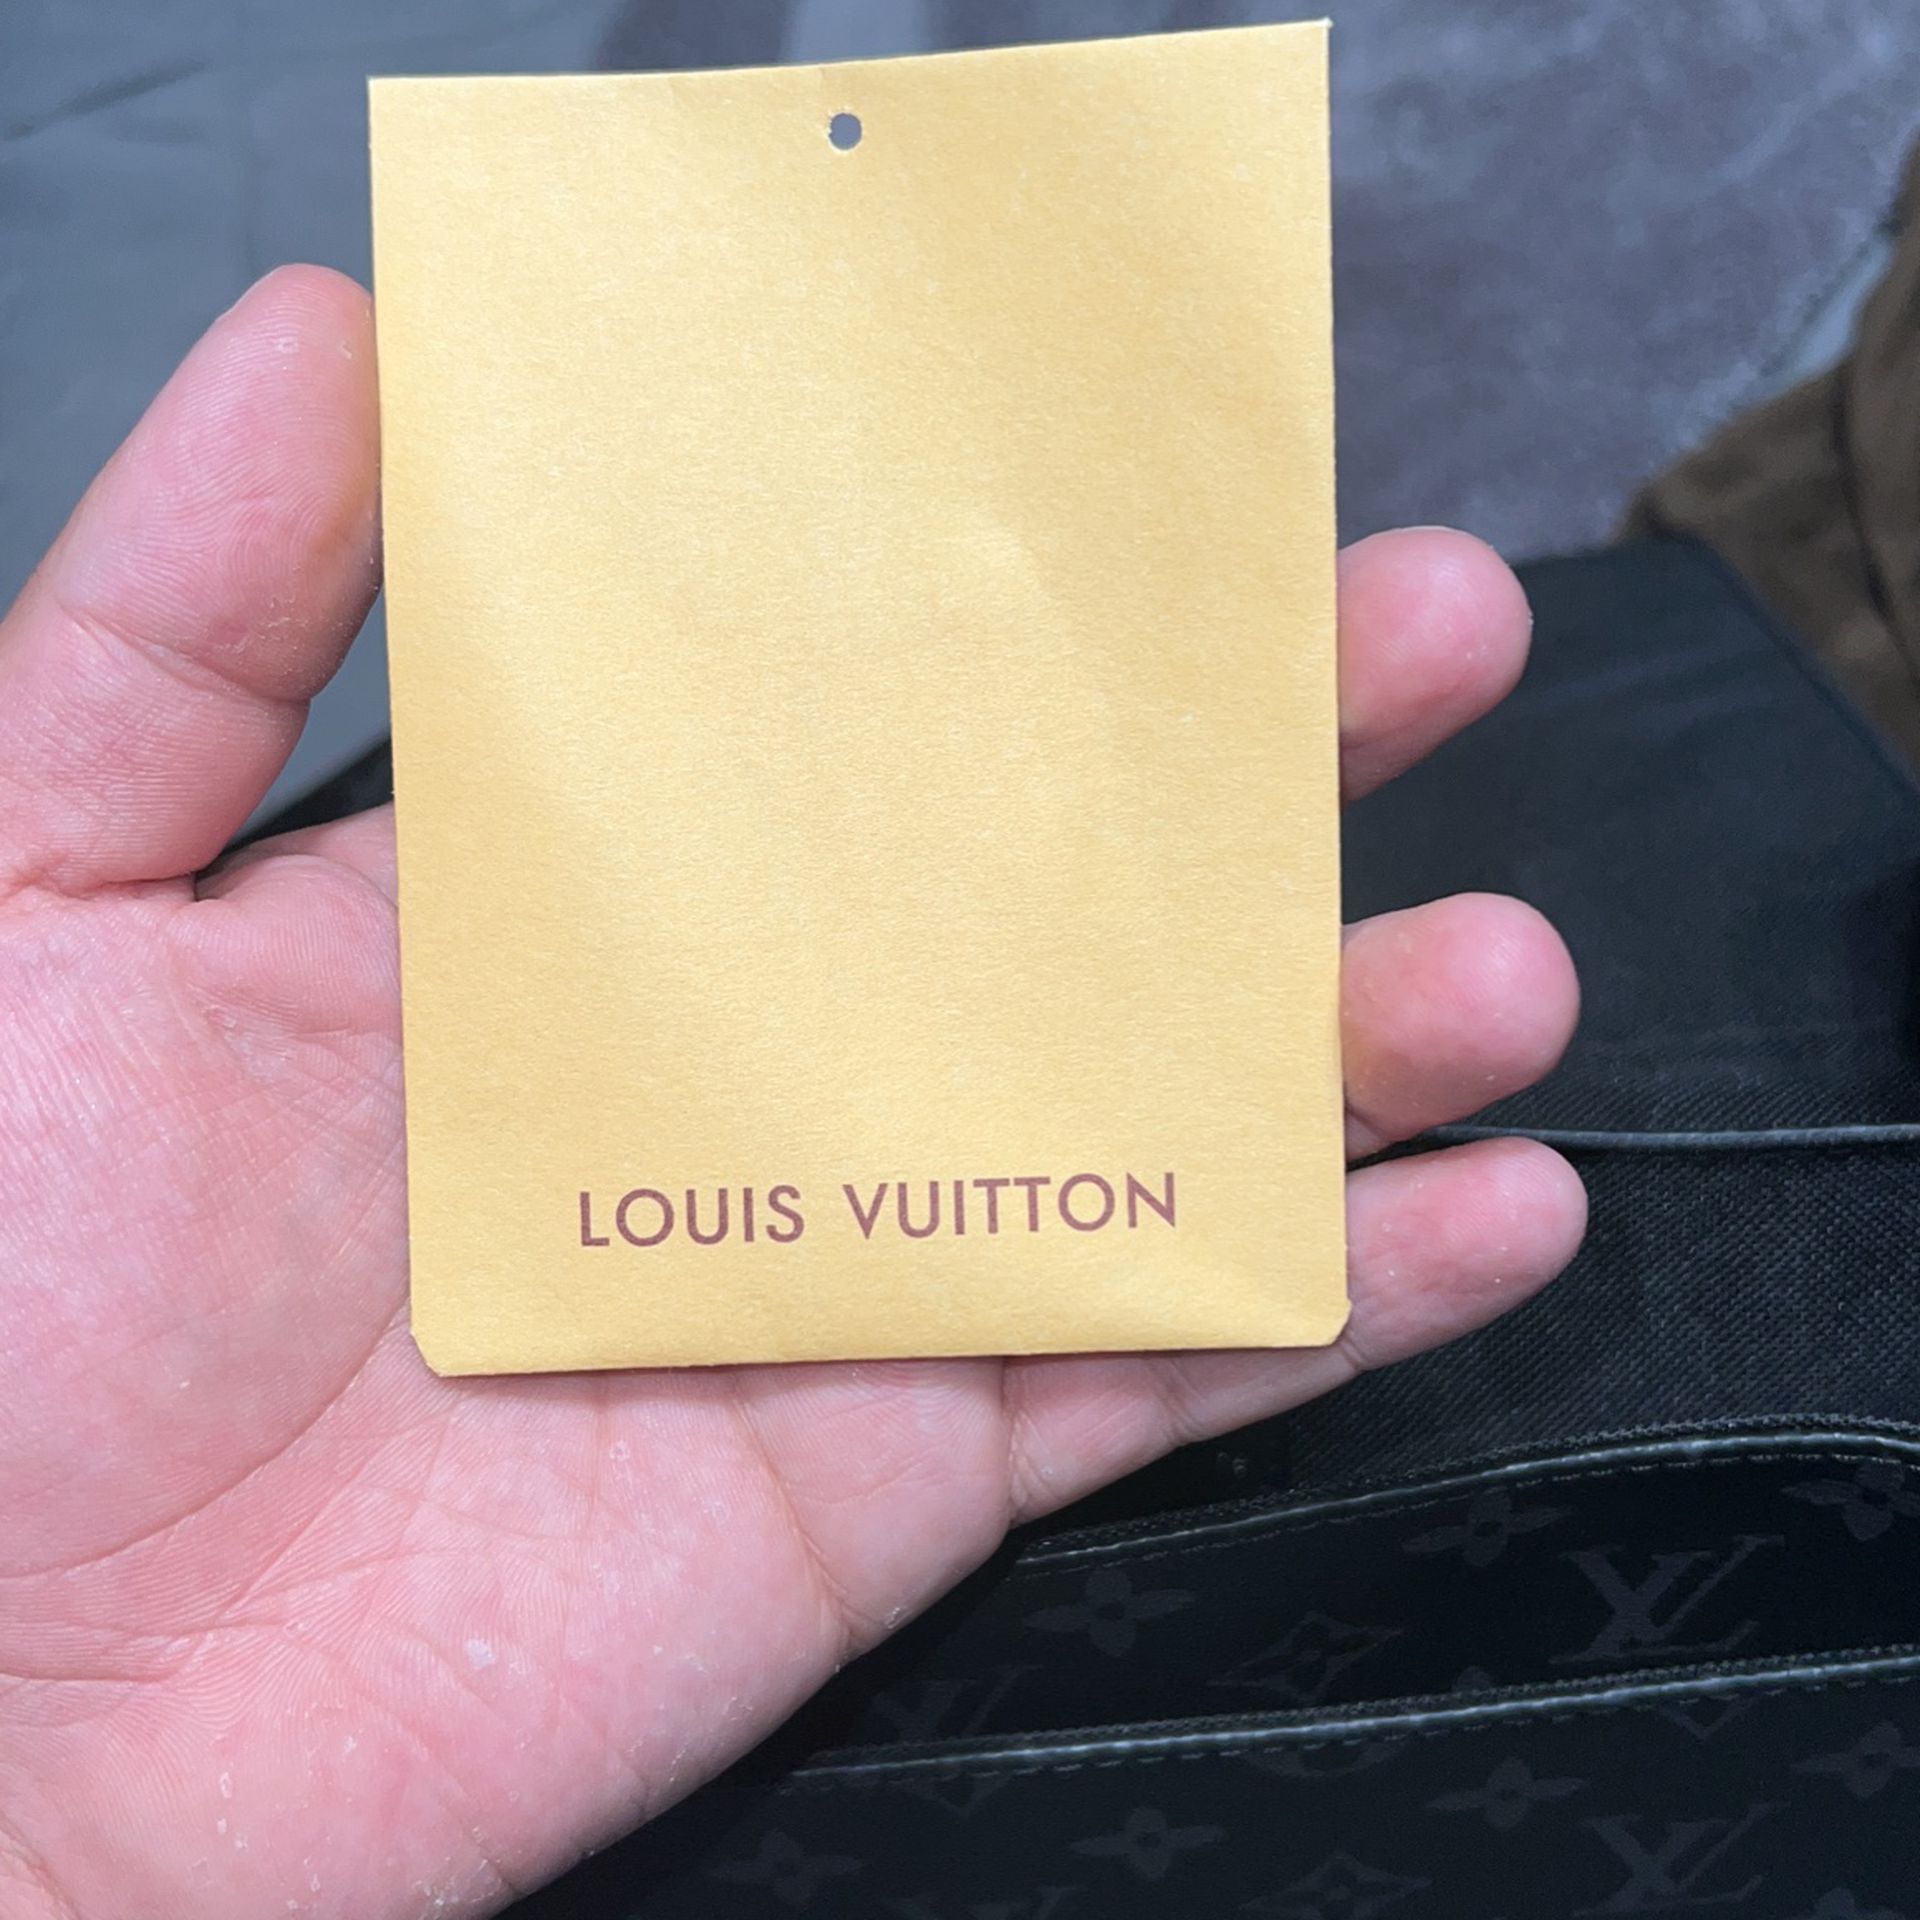 Louis Vuitton Bedding Set (QUEEN) for Sale in Orange, CA - OfferUp